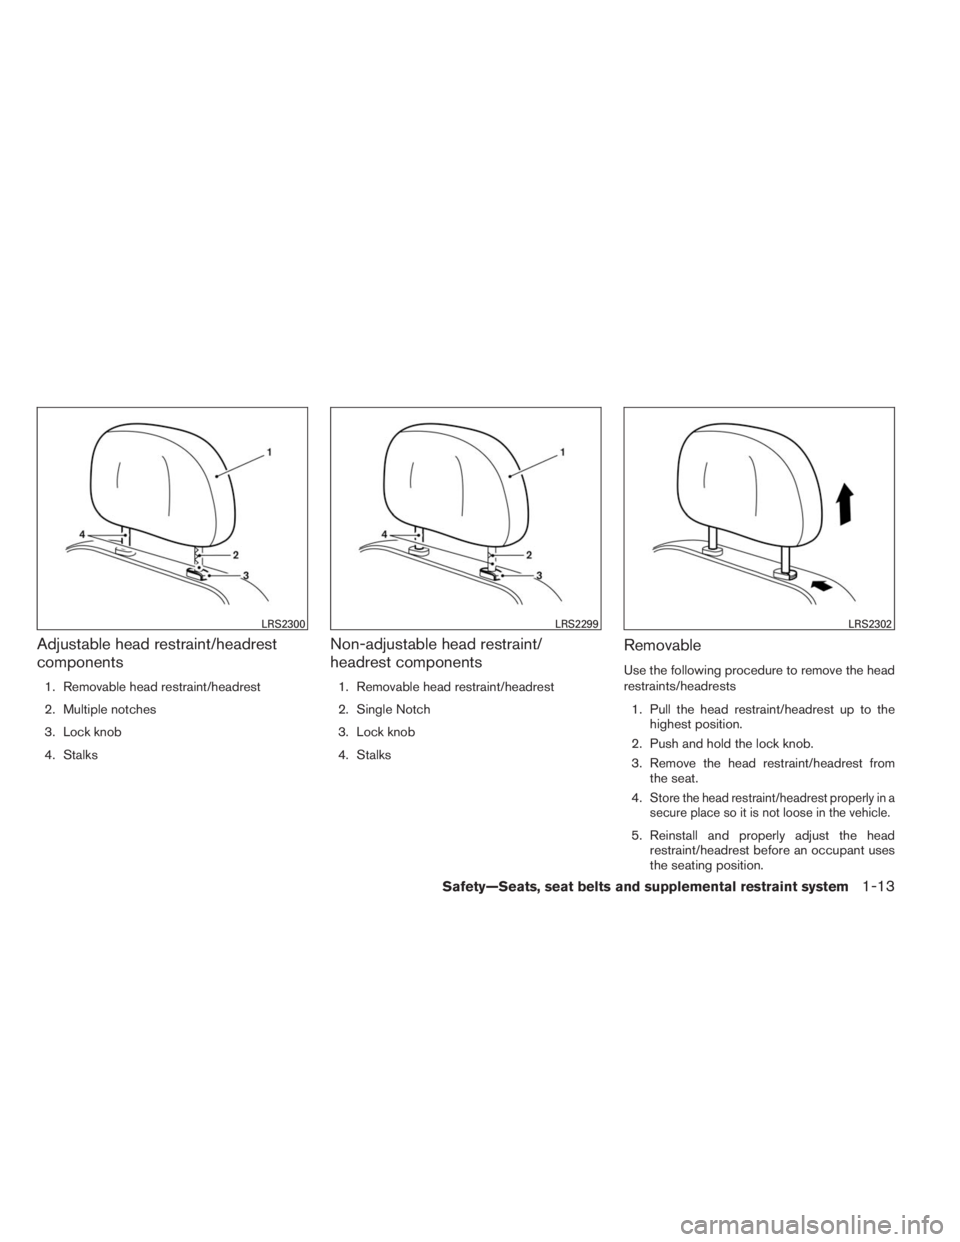 INFINITI QX60 2014 Owners Guide Adjustable head restraint/headrest
components
1. Removable head restraint/headrest
2. Multiple notches
3. Lock knob
4. Stalks
Non-adjustable head restraint/
headrest components
1. Removable head restr